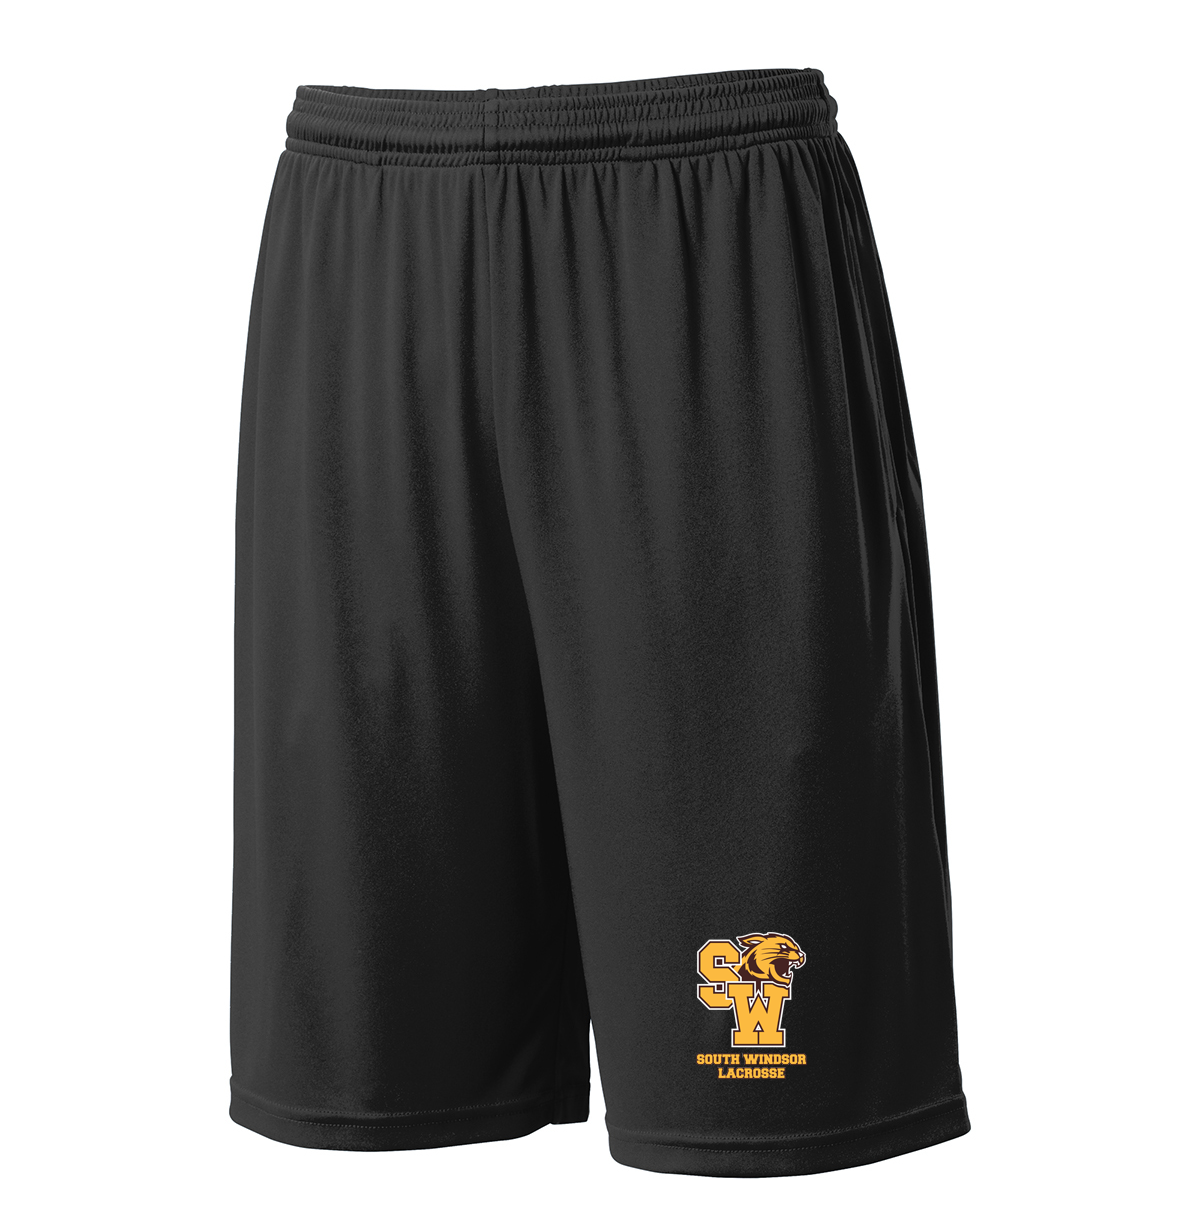 South Windsor Lacrosse Shorts